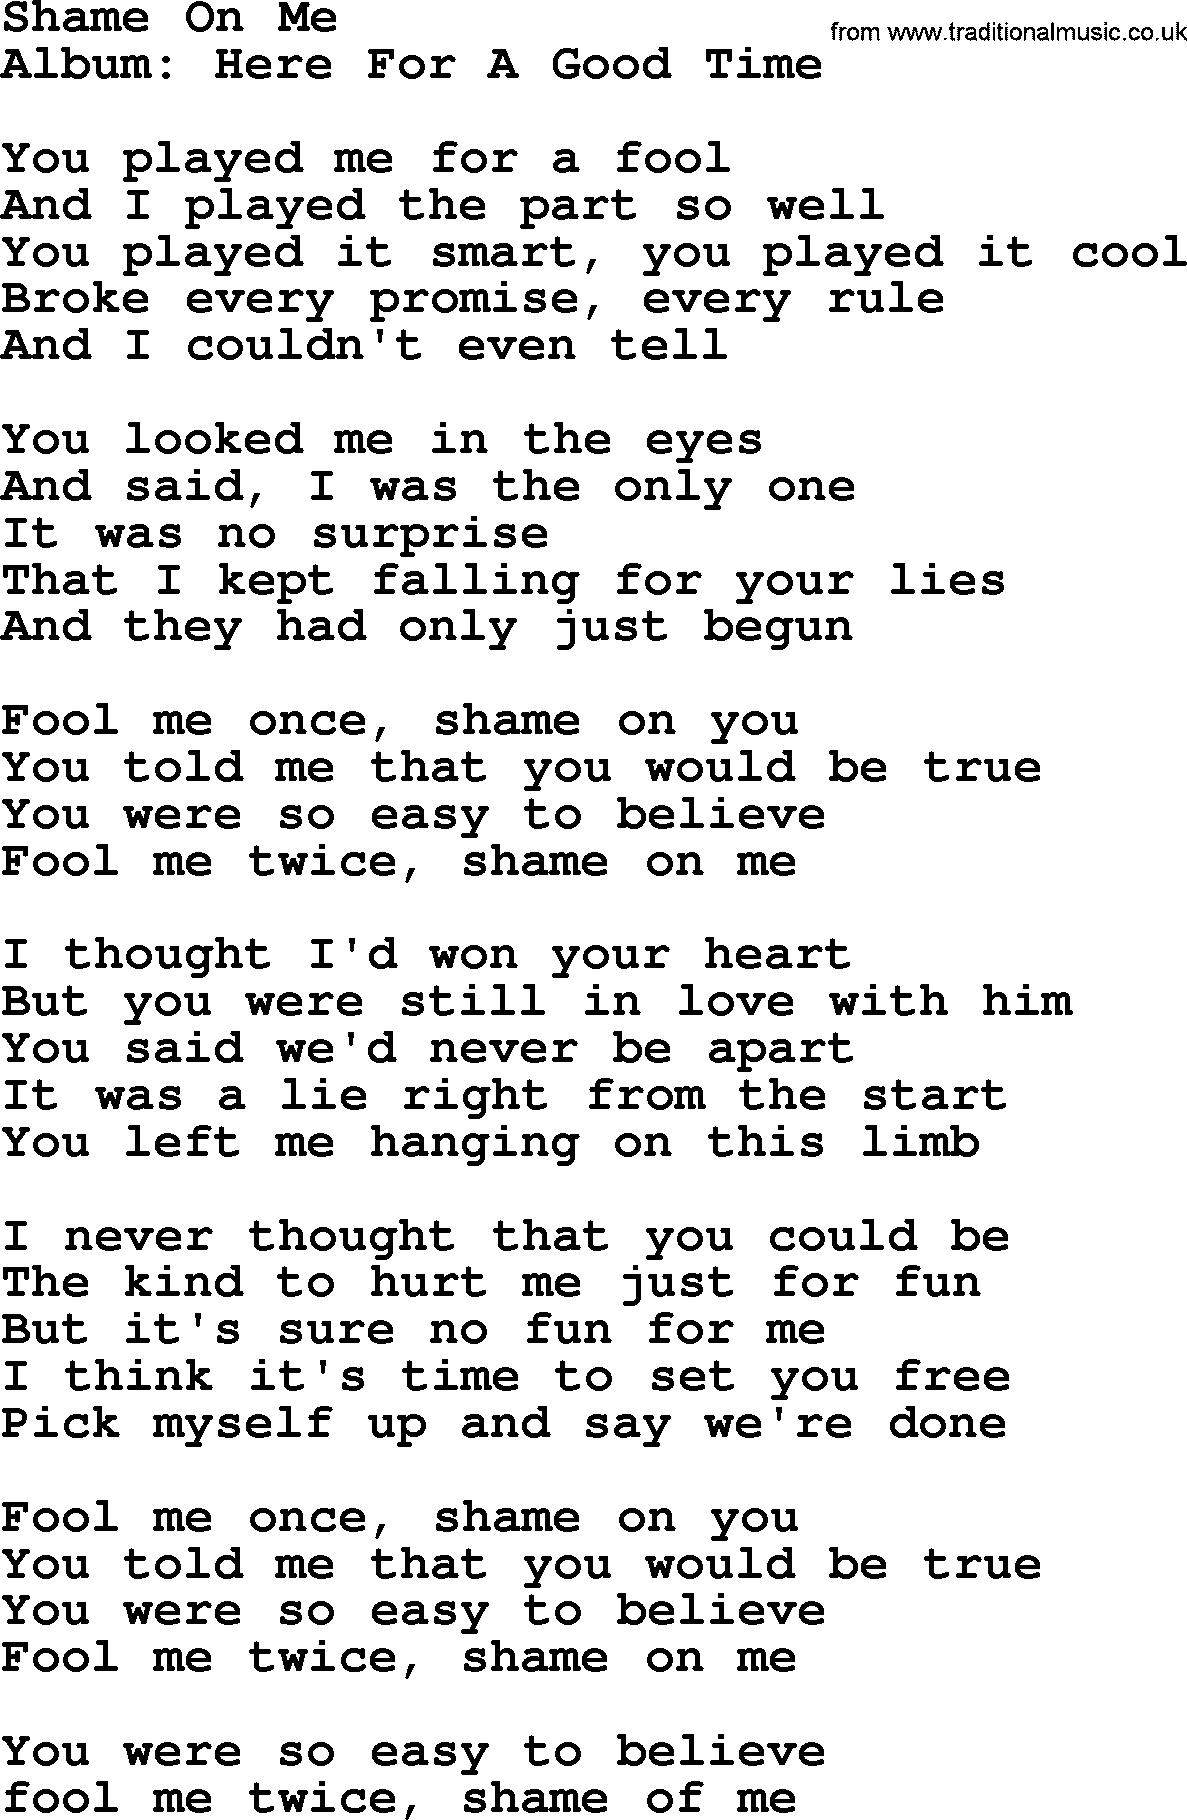 George Strait song: Shame On Me, lyrics